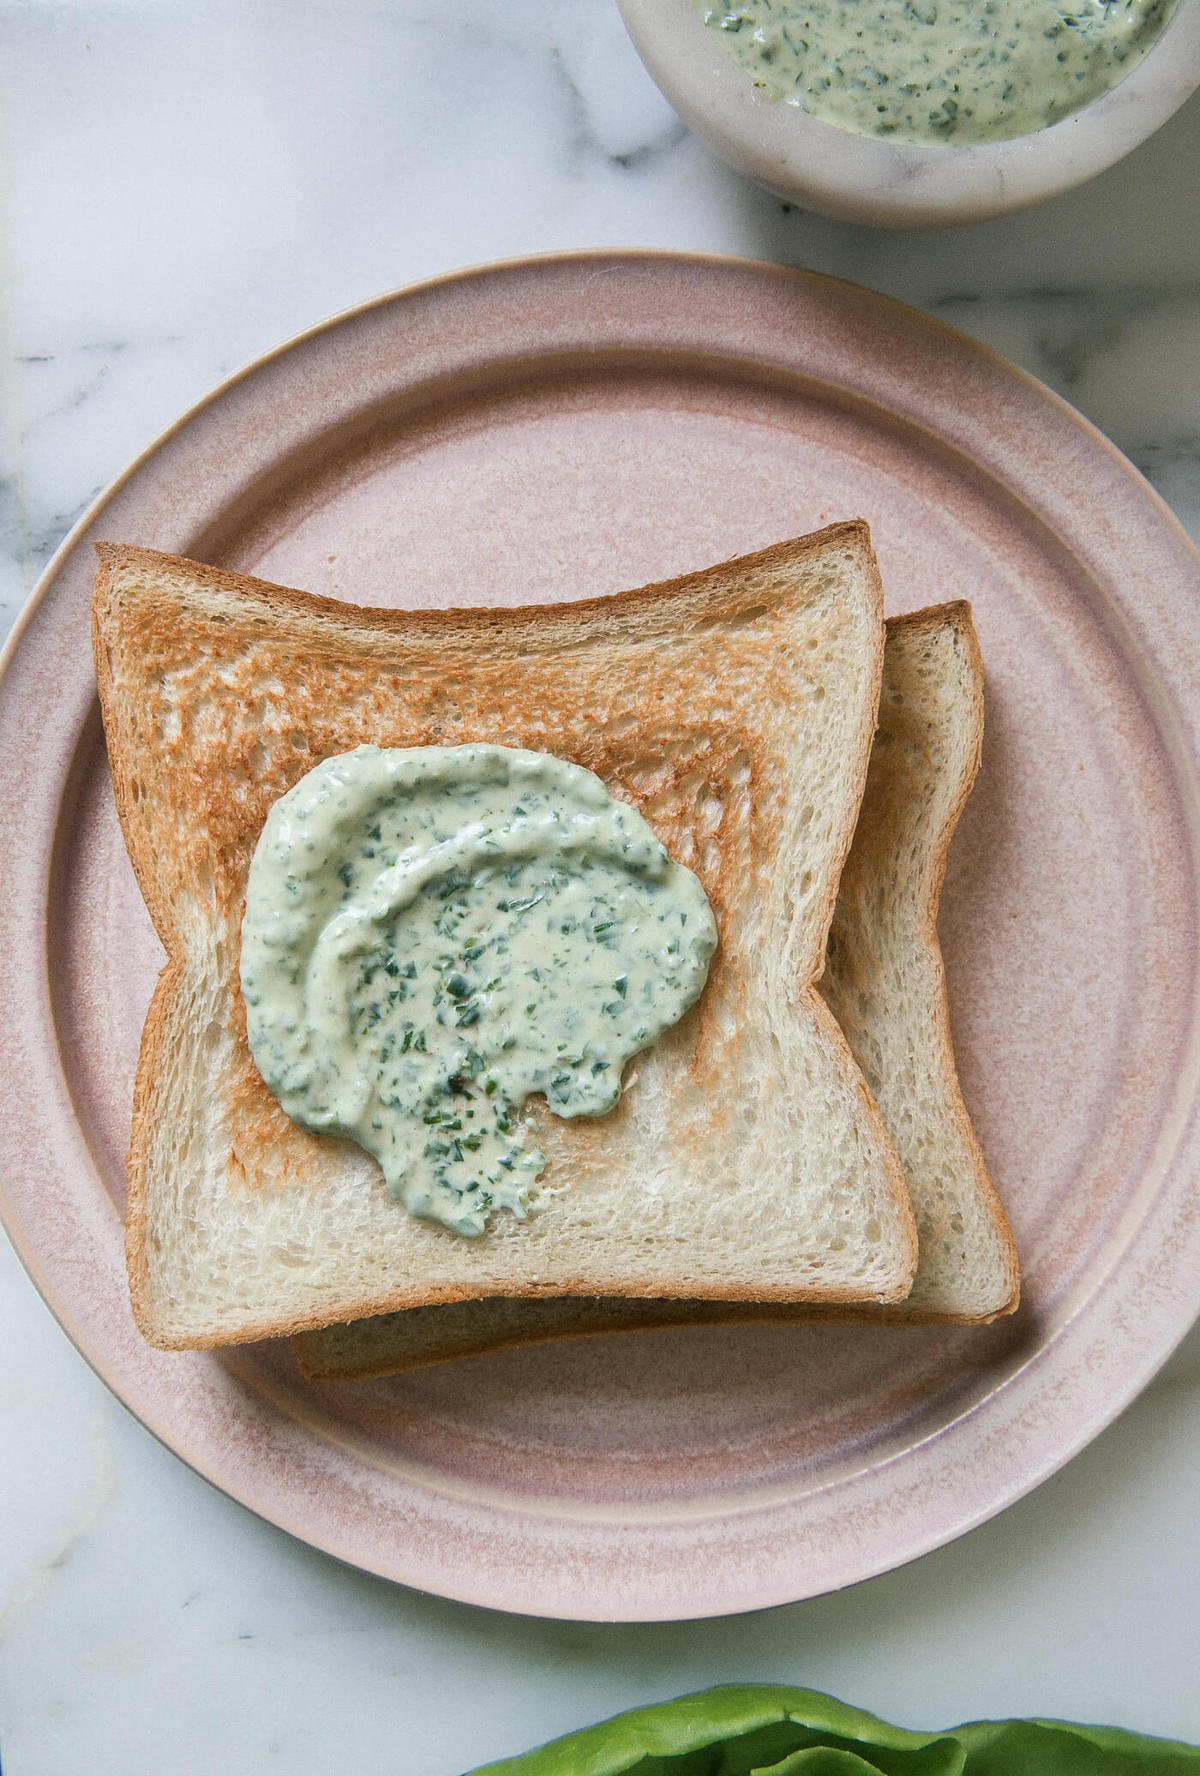 Green goddess mayo on bread. 